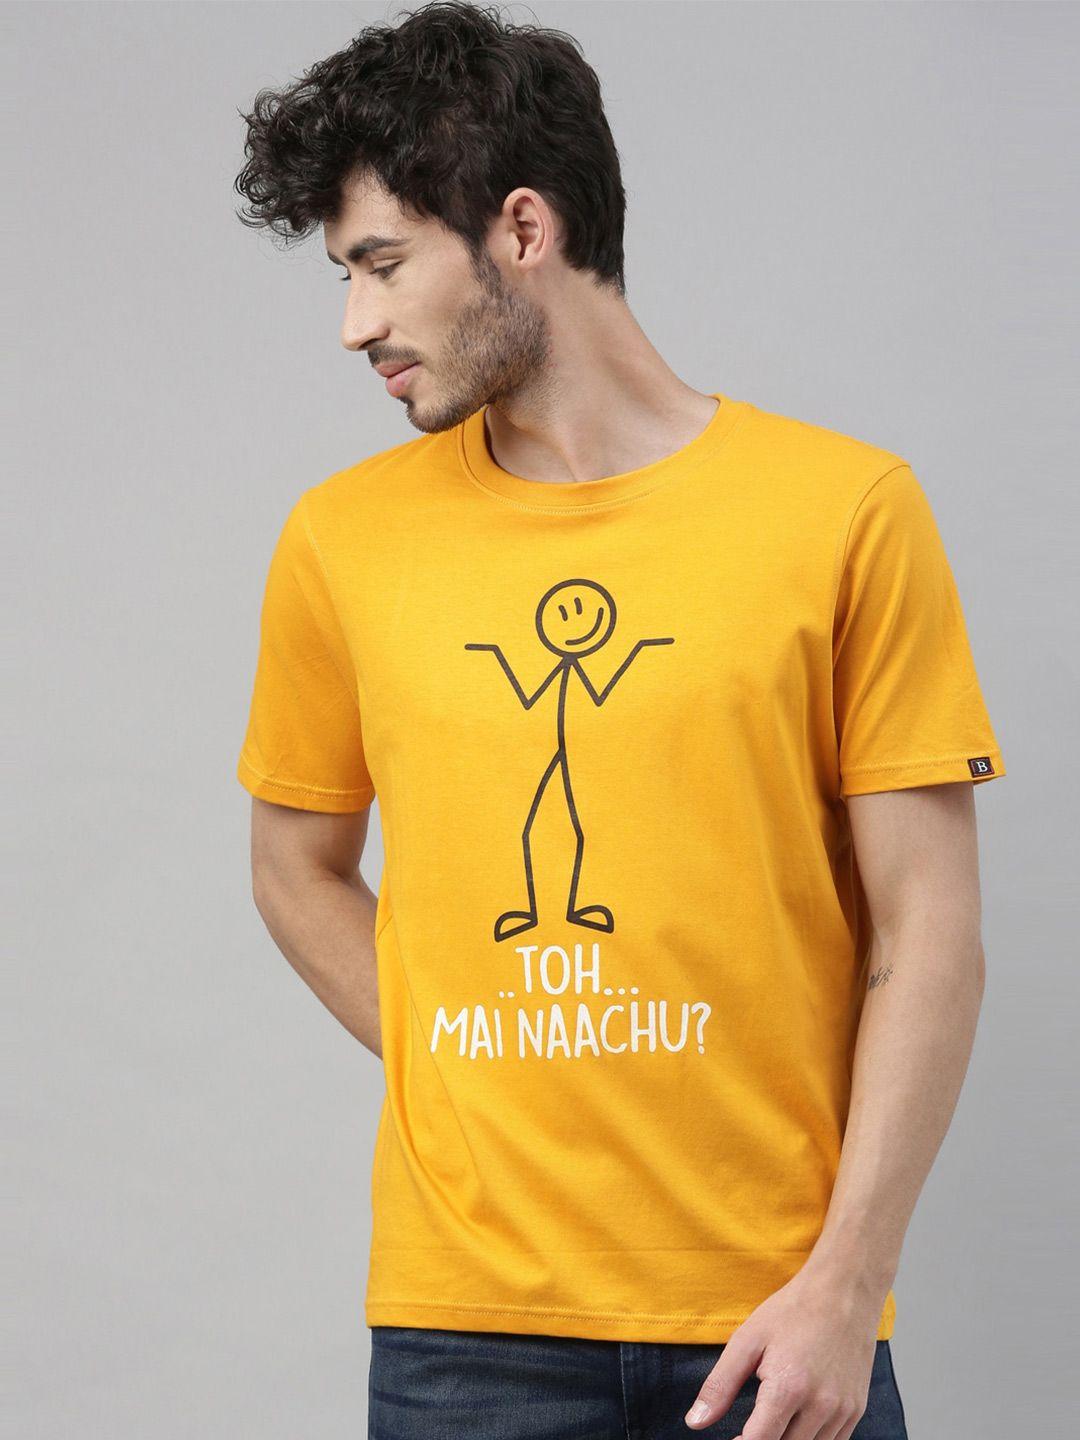 bushirt men mustard yellow printed round neck cotton pure cotton t-shirt